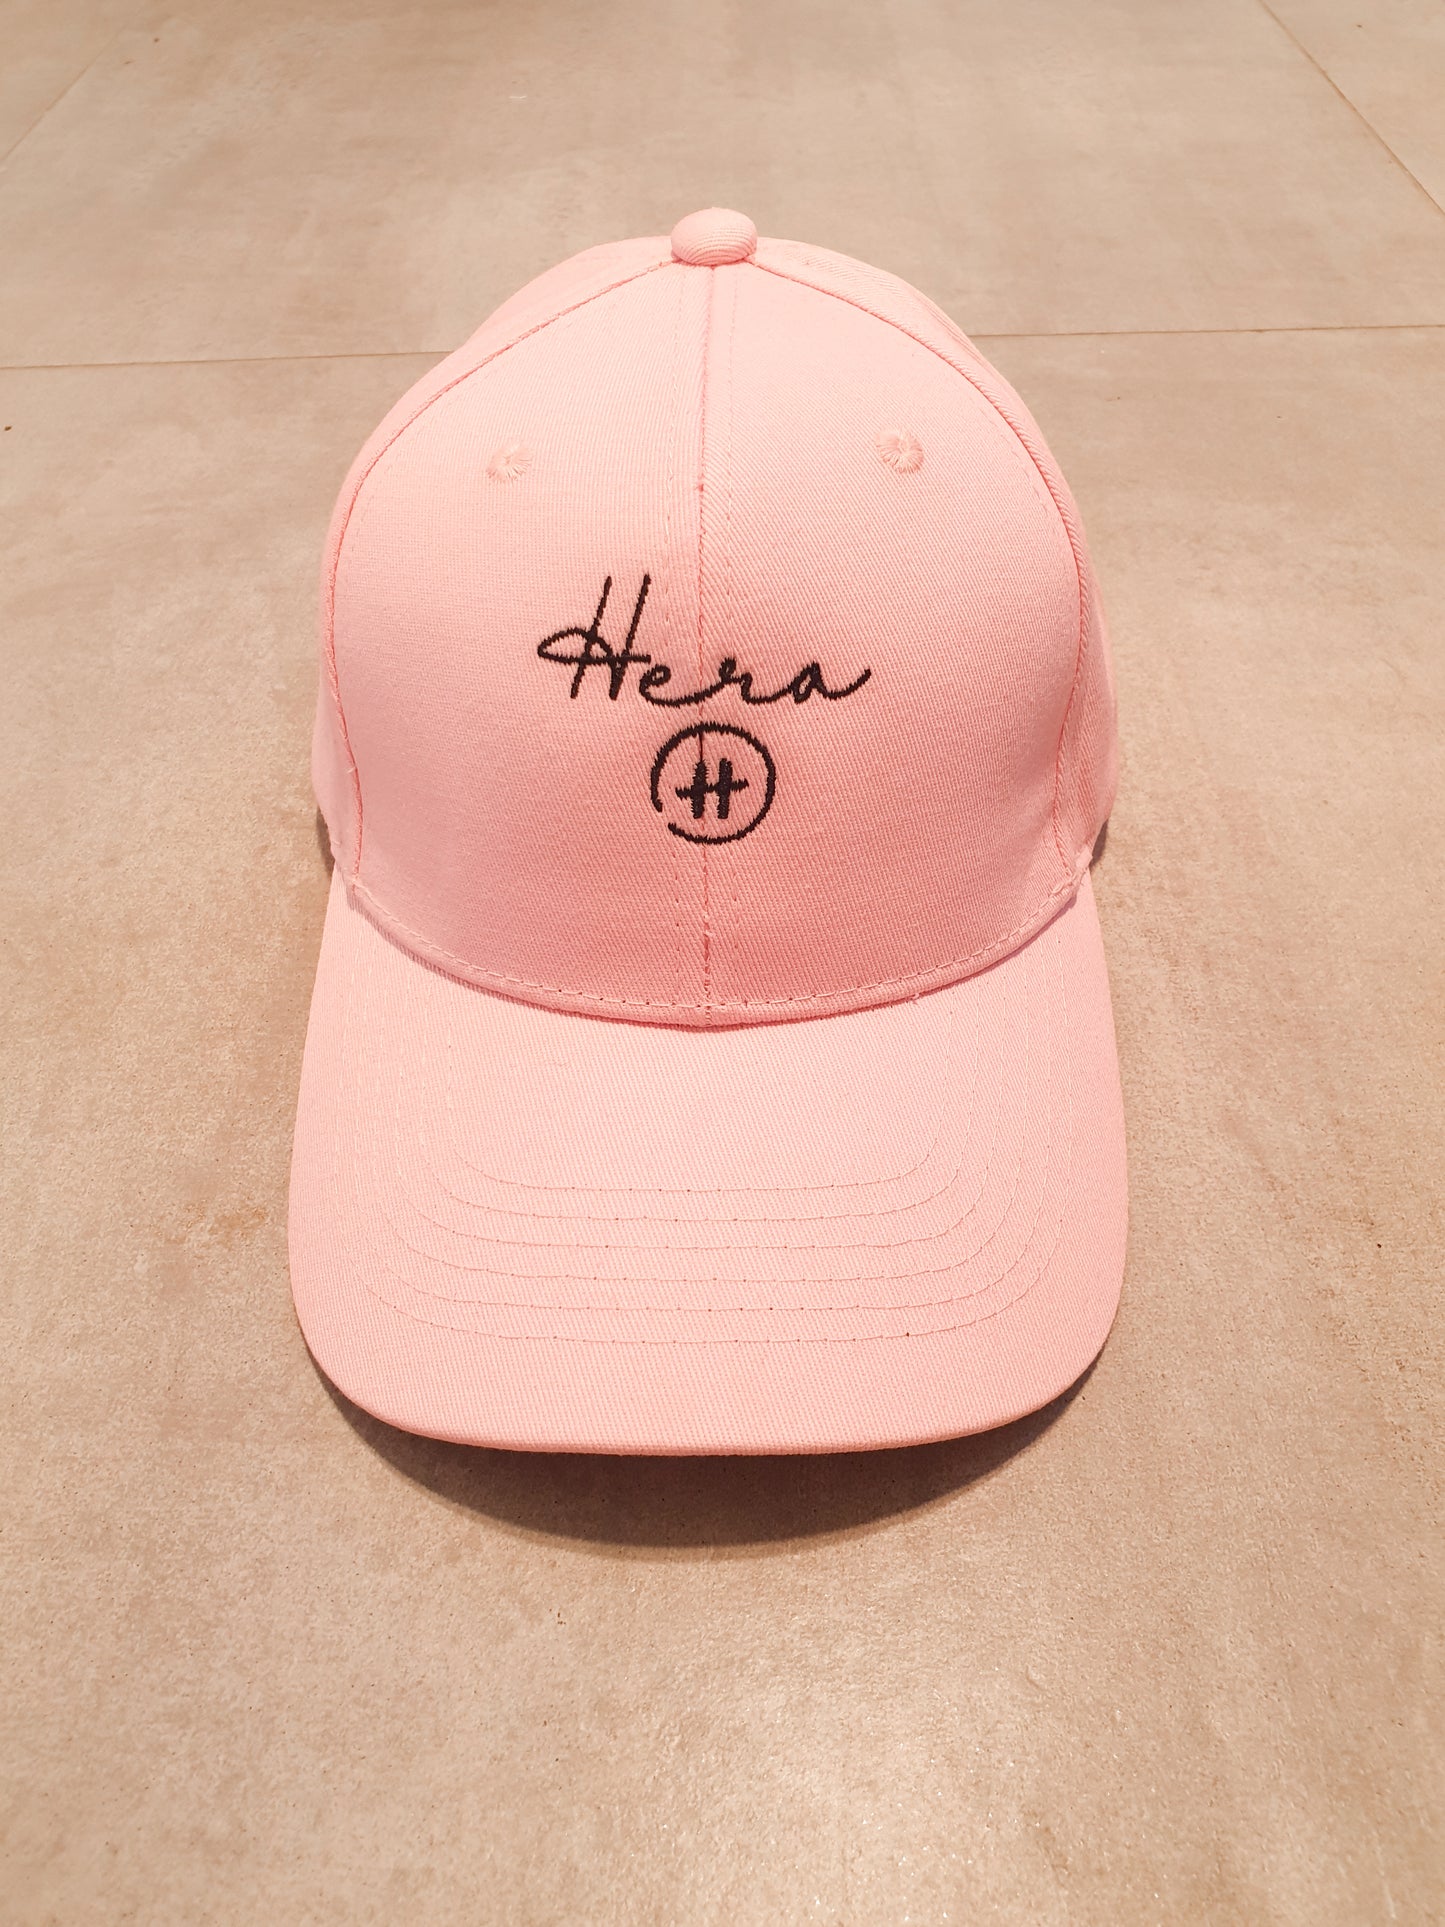 Hera Cap - Pink